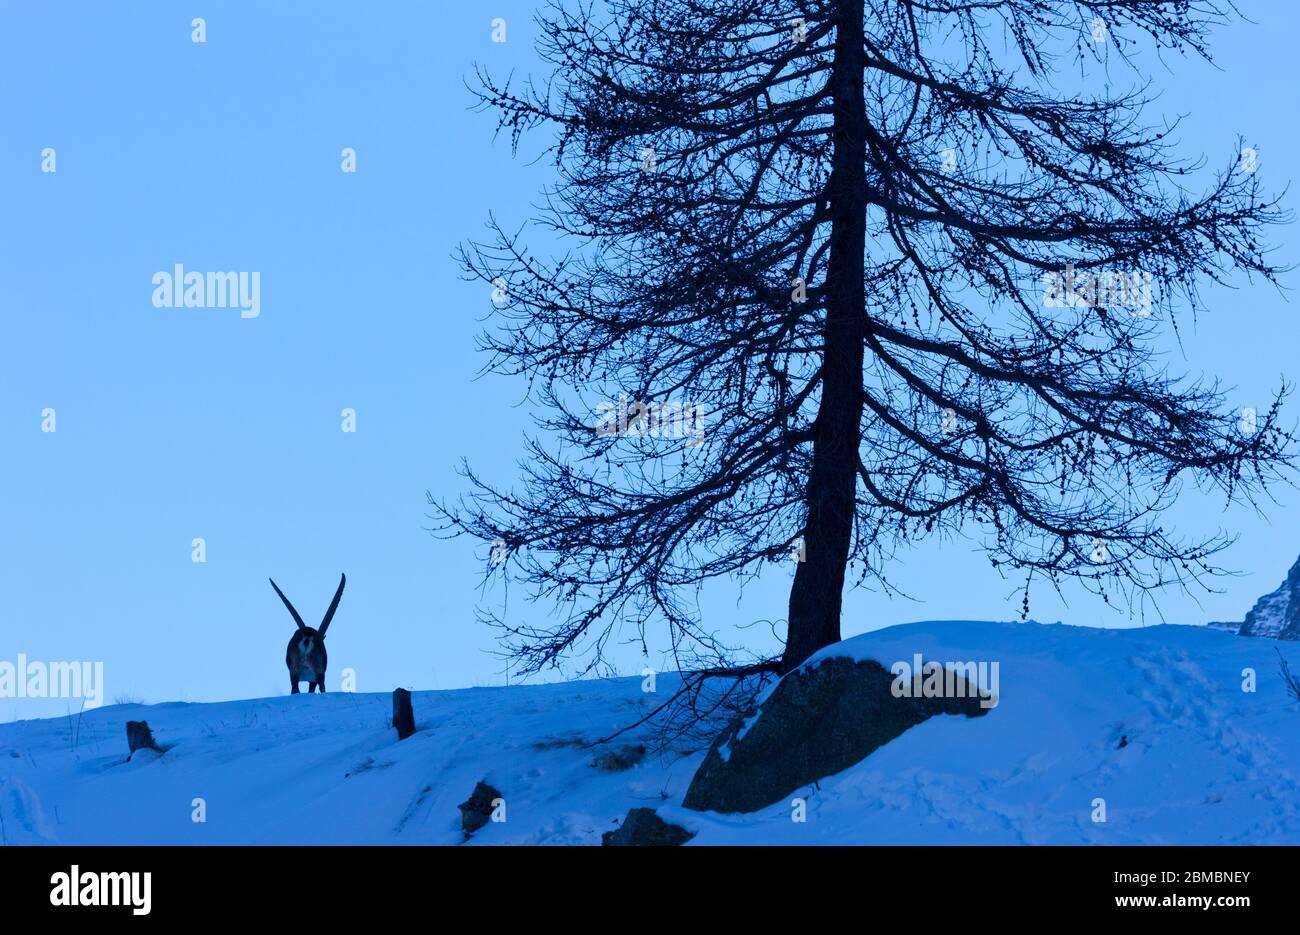 ALPINE IBEX -  IBICE DE LOS ALPES (Capra ibex), Gran Paradiso National Park, Valnontey, Aosta Valley, Alpes, Italy, Europe Stock Photo